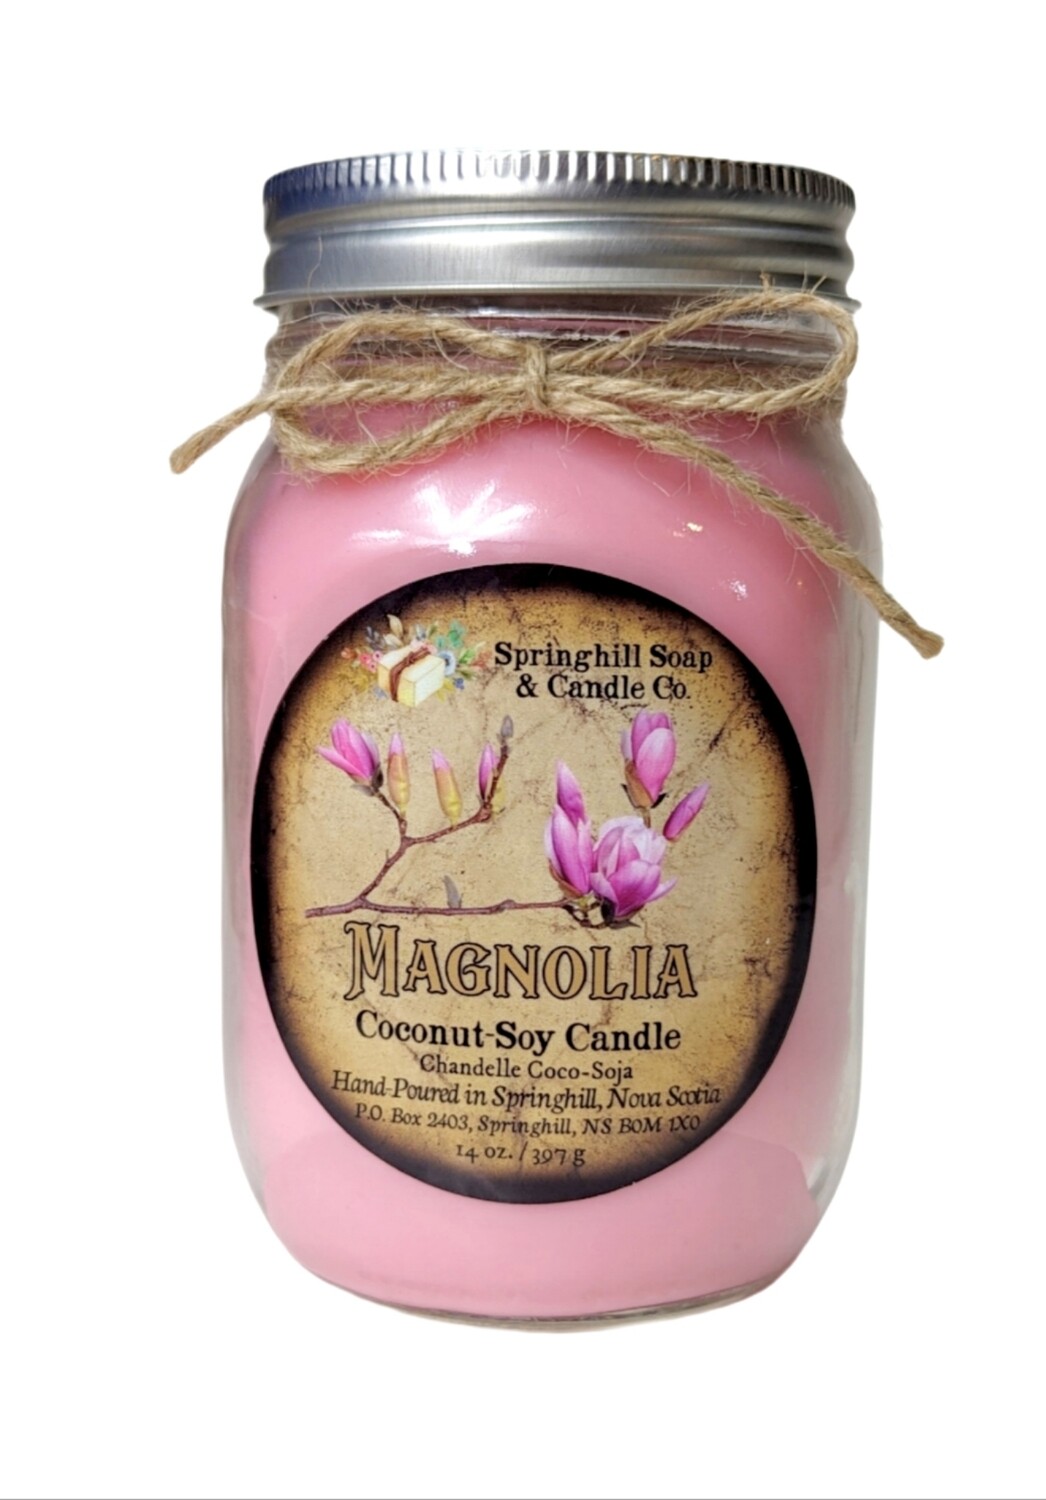 "Magnolia" Premium Coconut-Soy Candle (14oz)